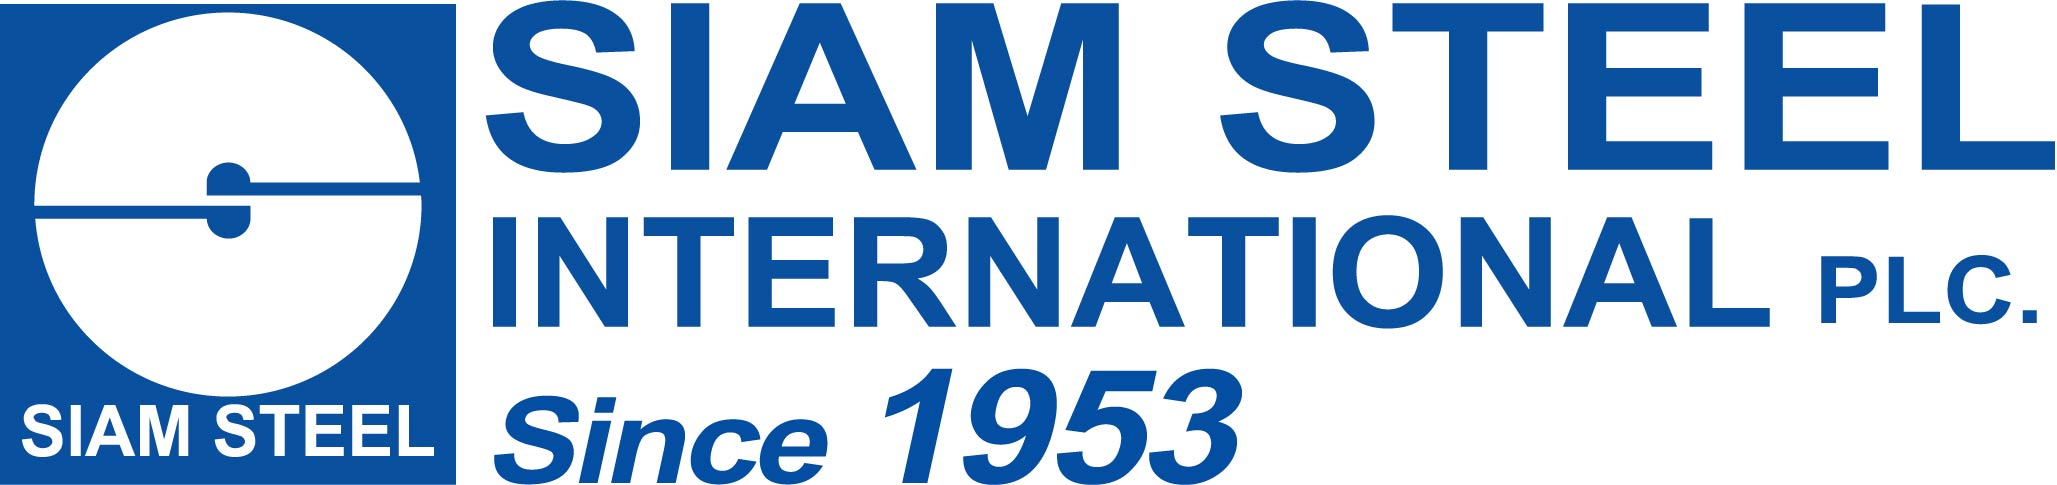 Siam Steel International Public Company Limited